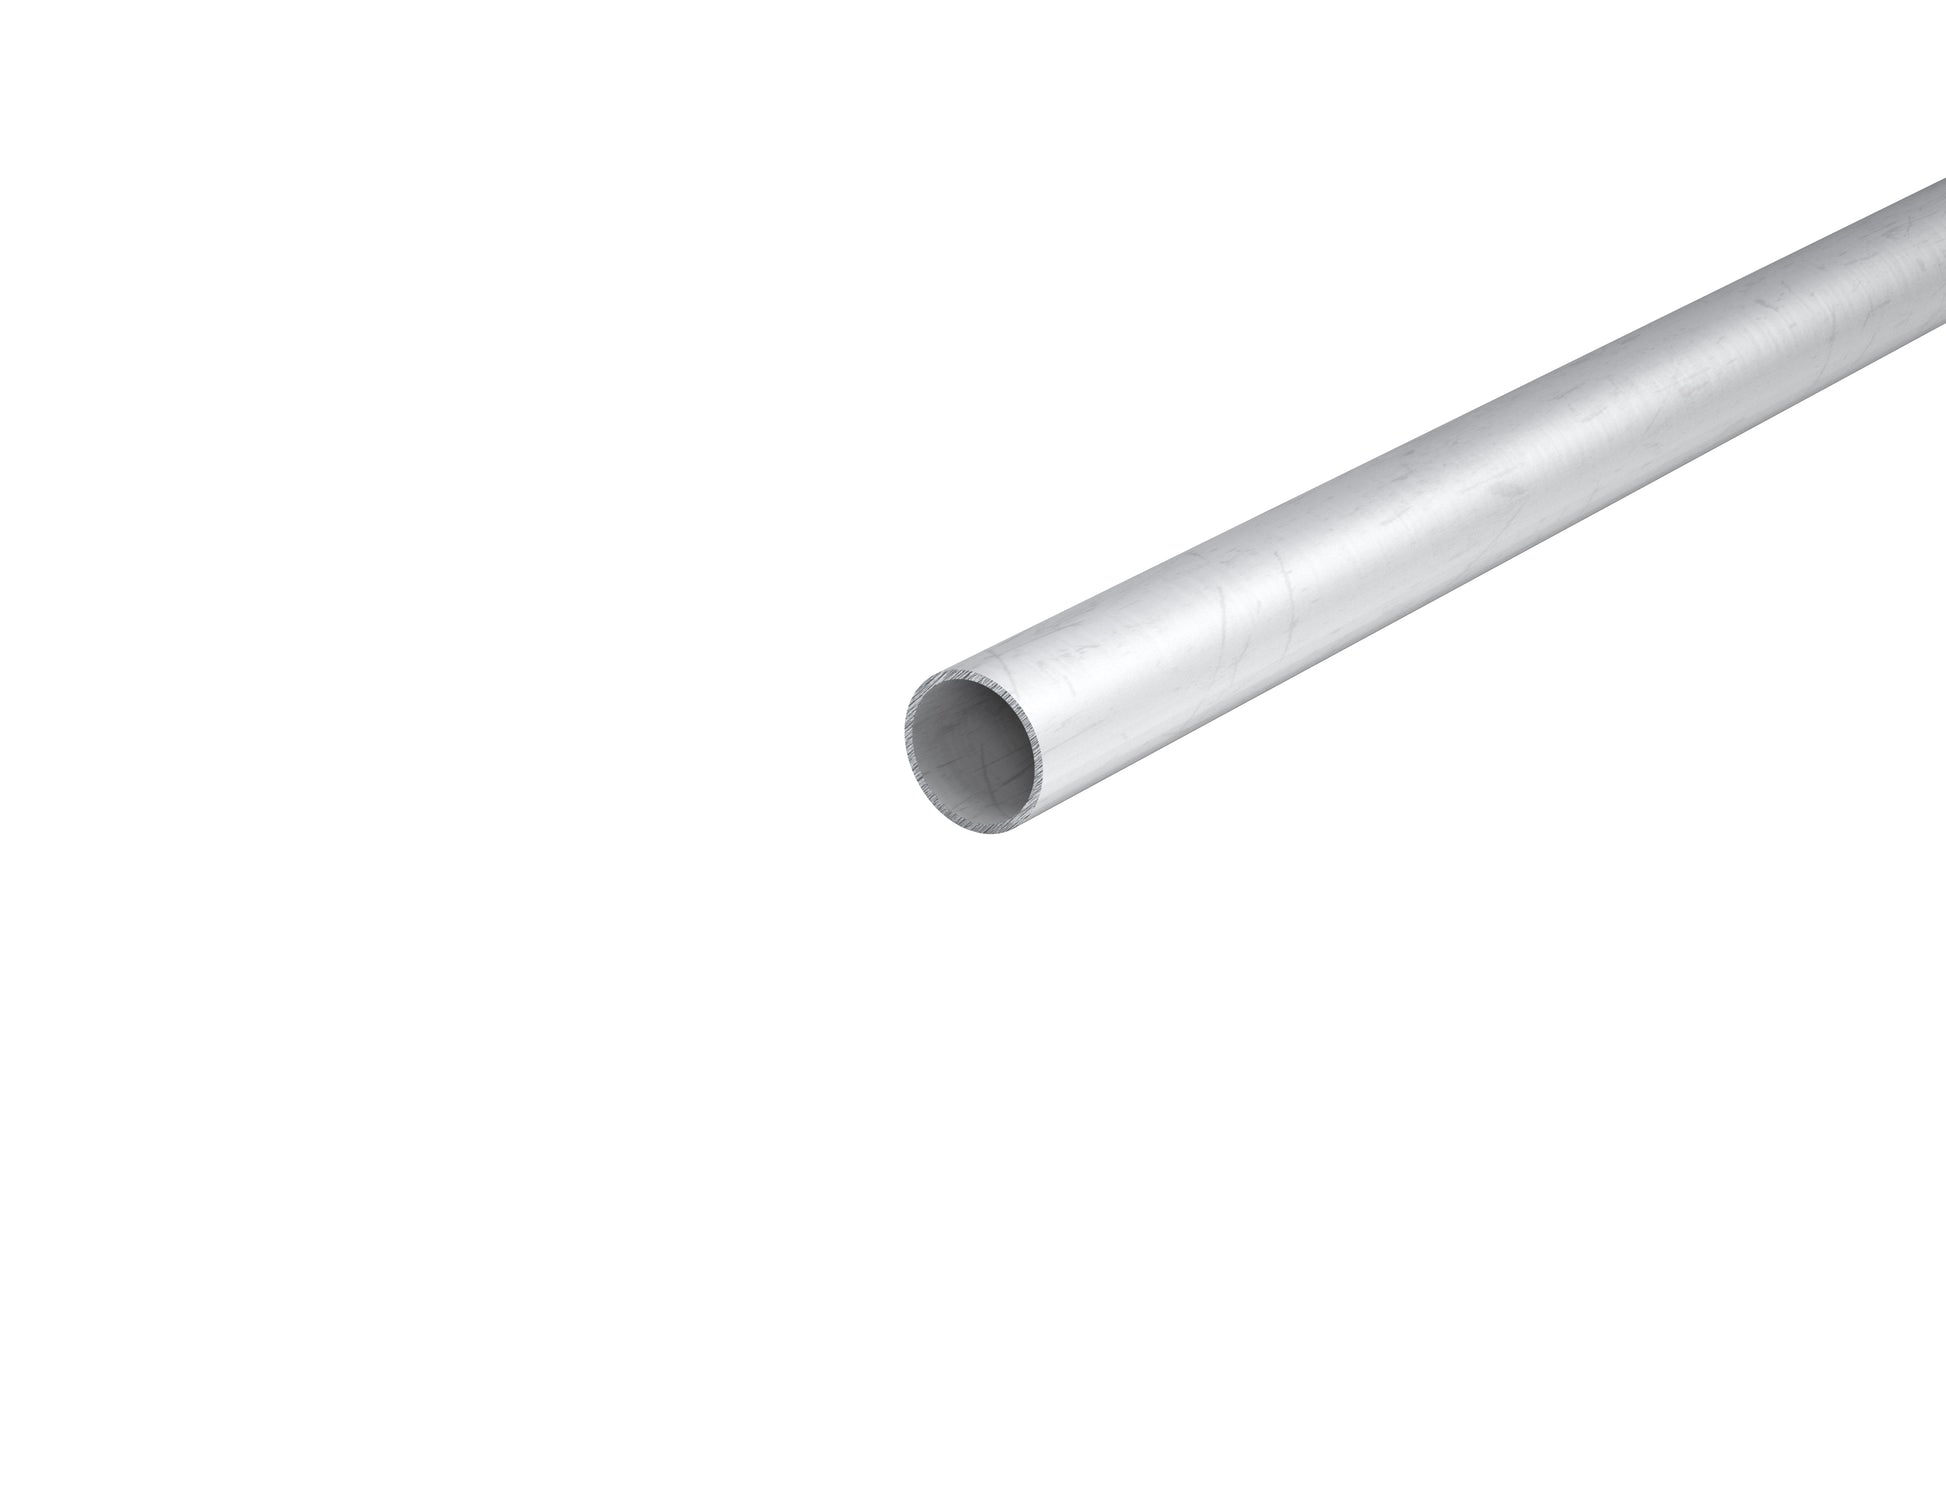 1" OD .058" wall round aluminum tube, 16 gauge 1" aluminum tube, 6063-T832 drawn .058" wall